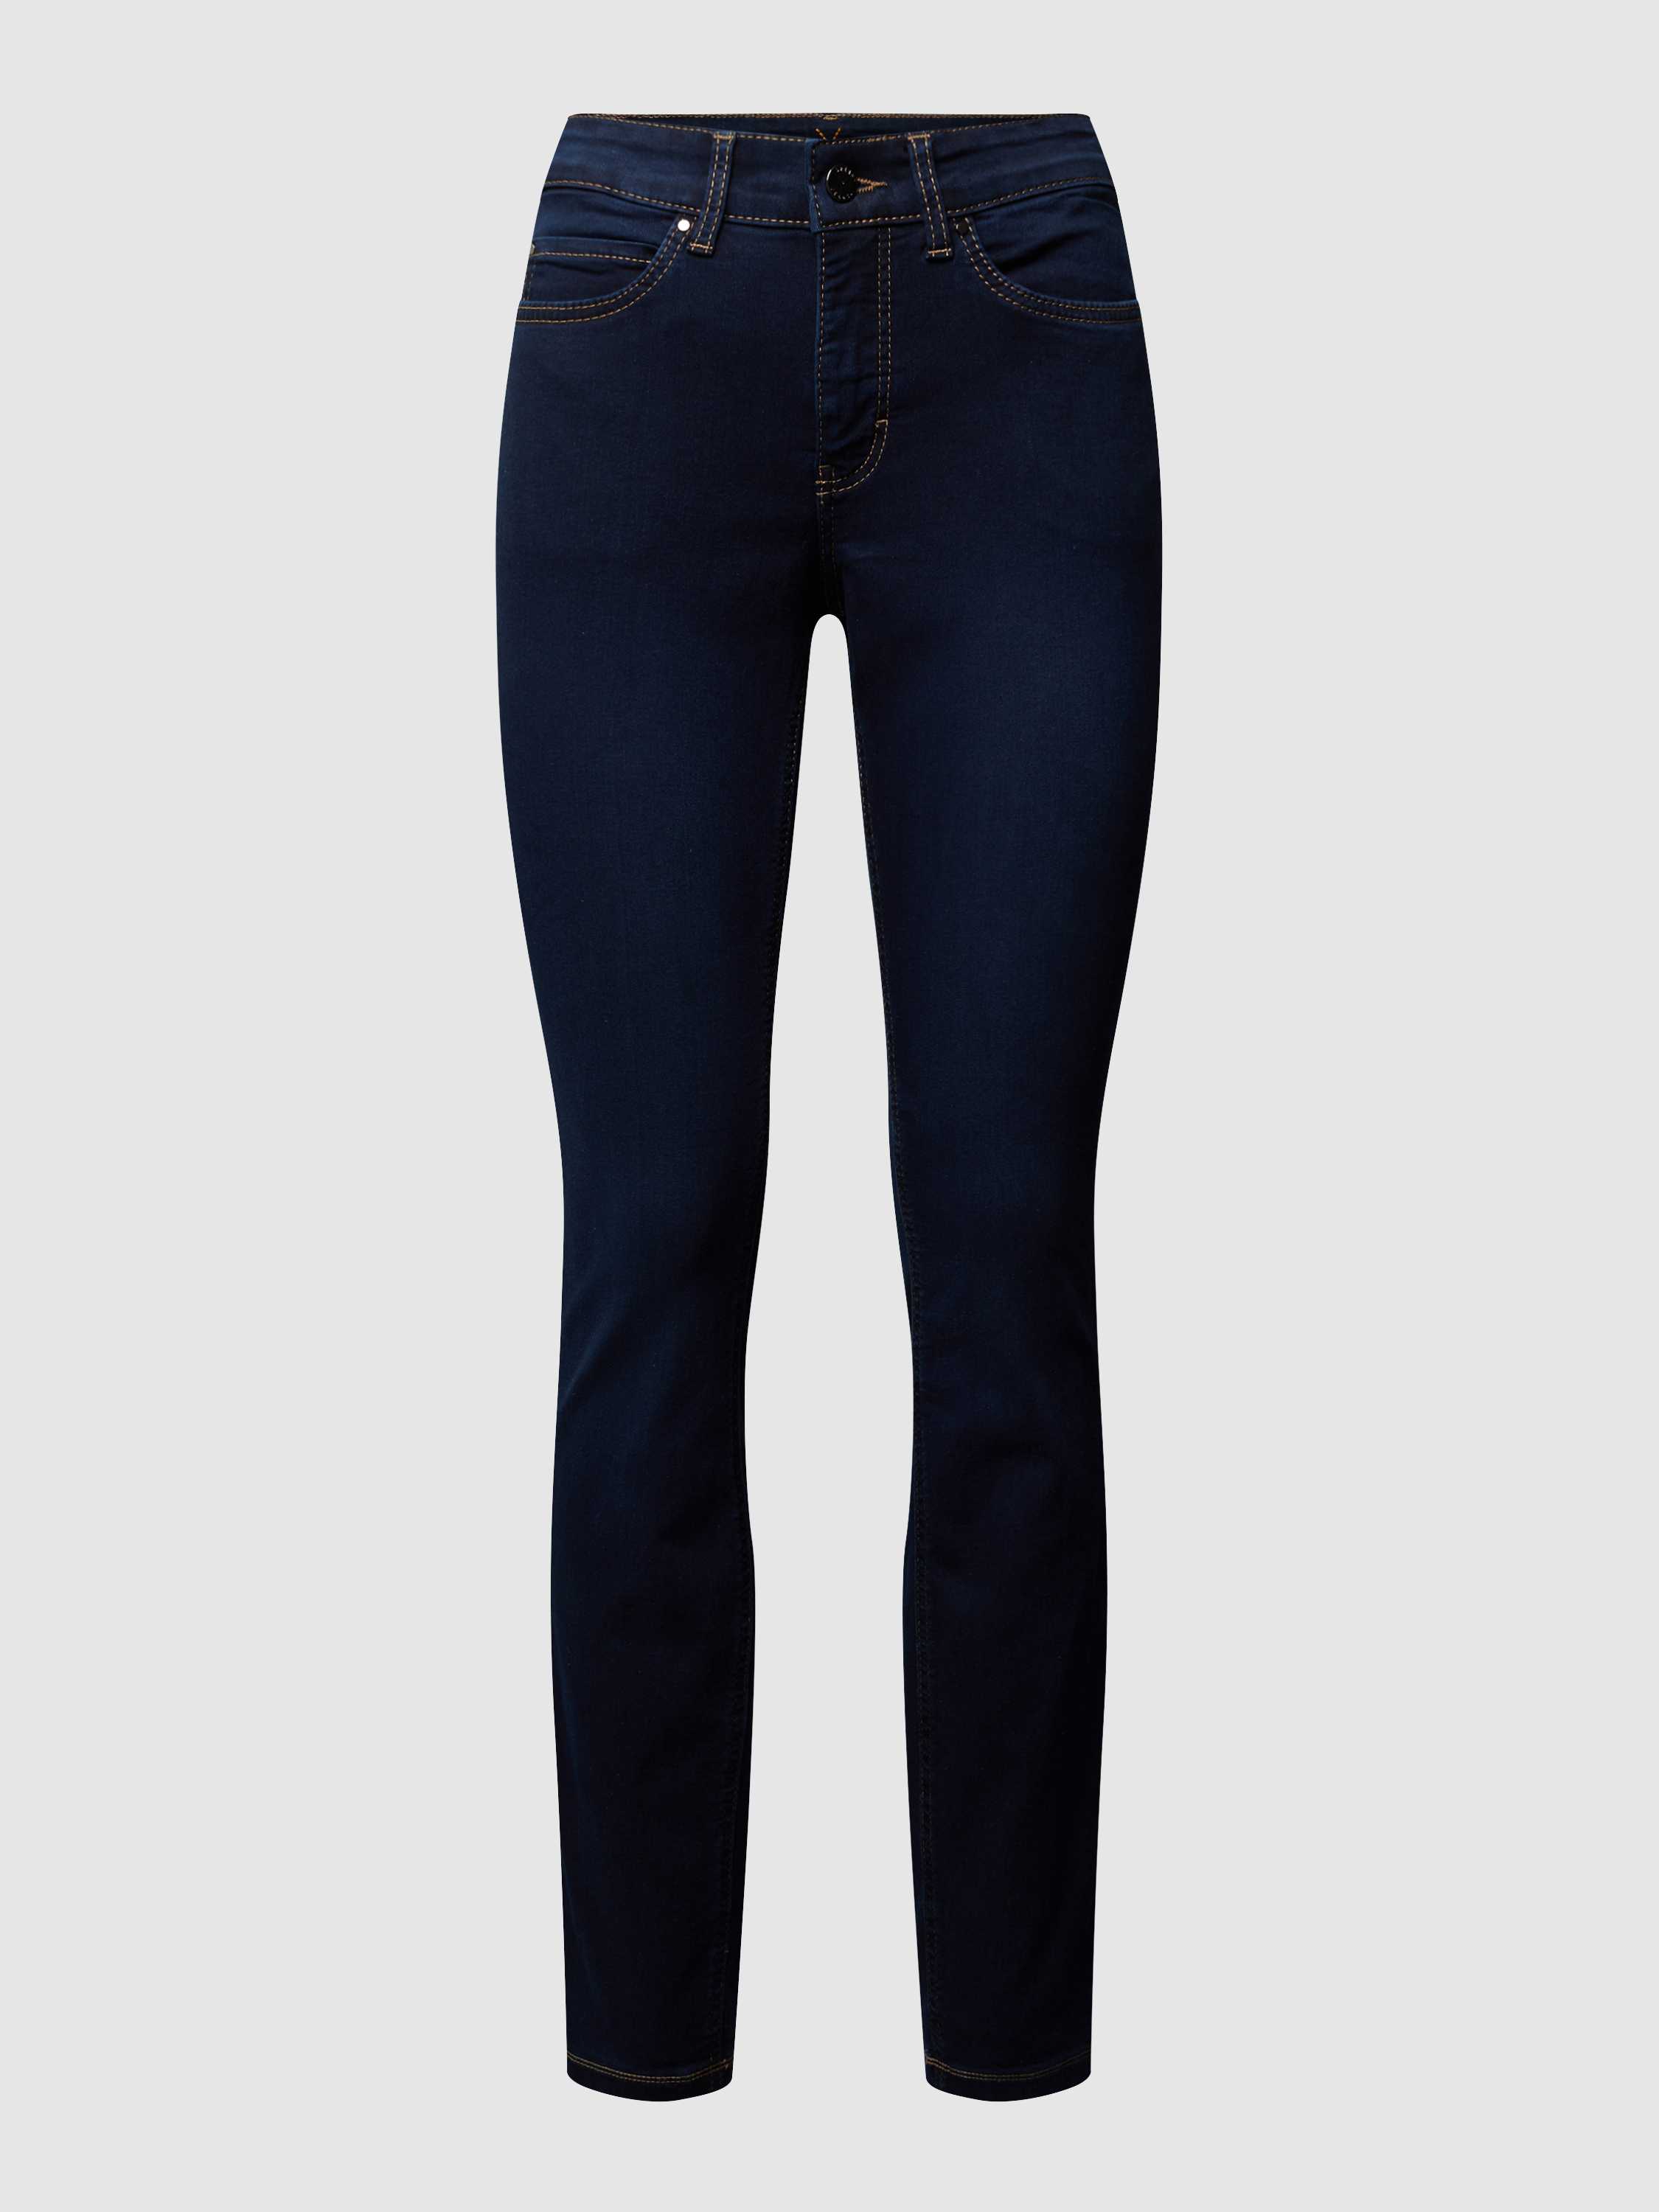 Skinny Fit Jeans mit Stretch-Anteil  Modell Dream Skinny